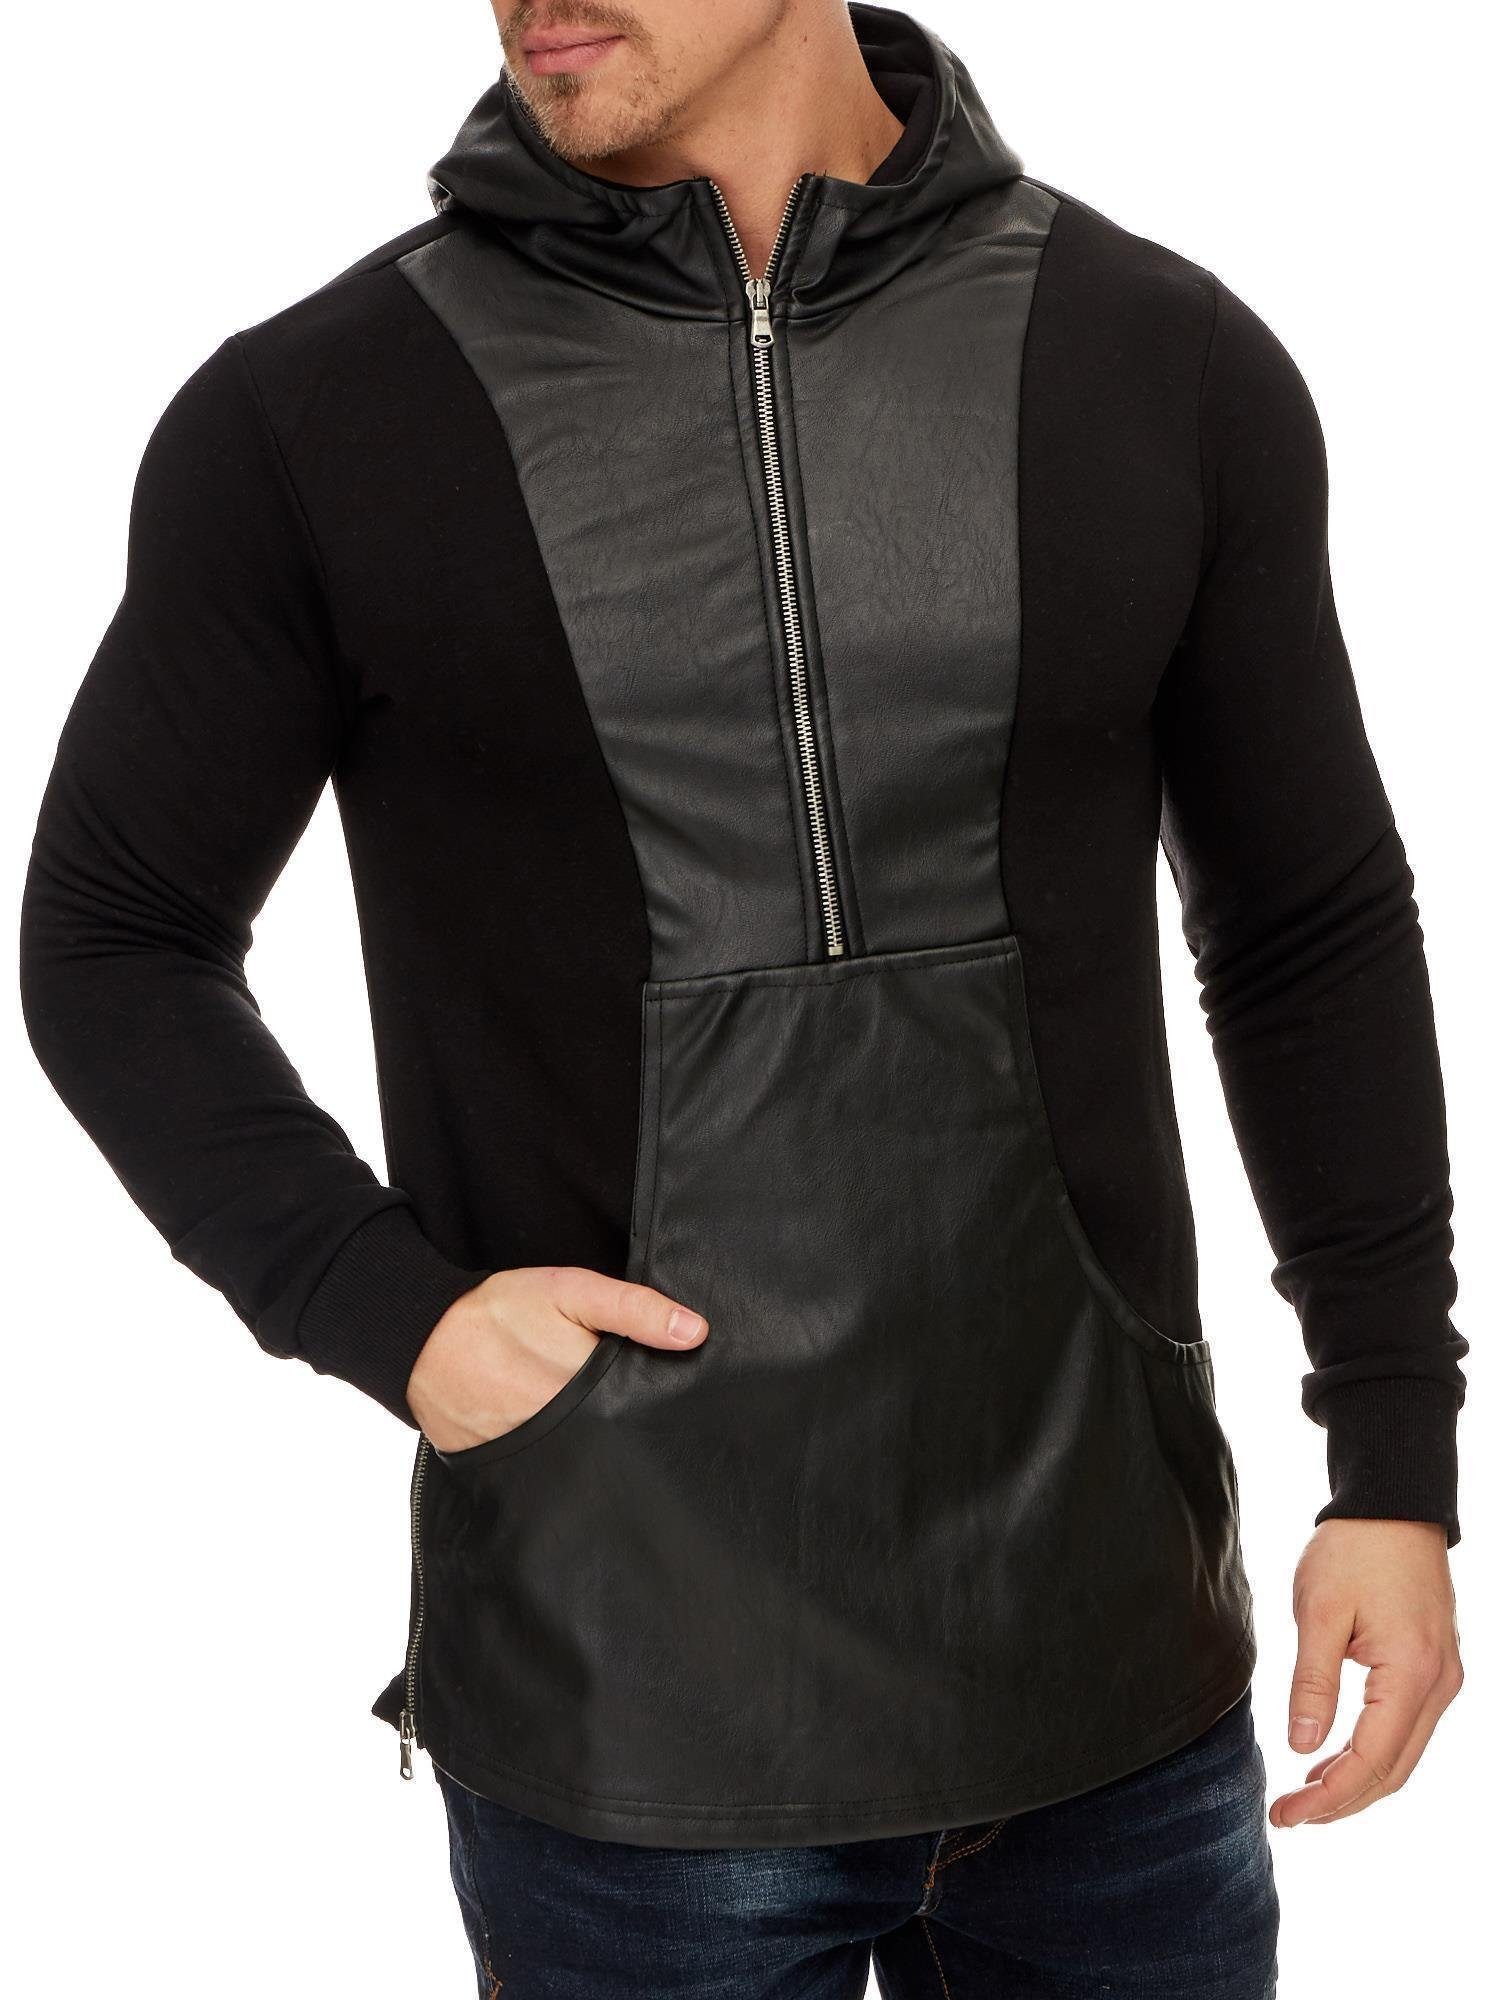 Tazzio Sweatshirt Oversize modisches Kapuzensweatshirt schwarz-1216